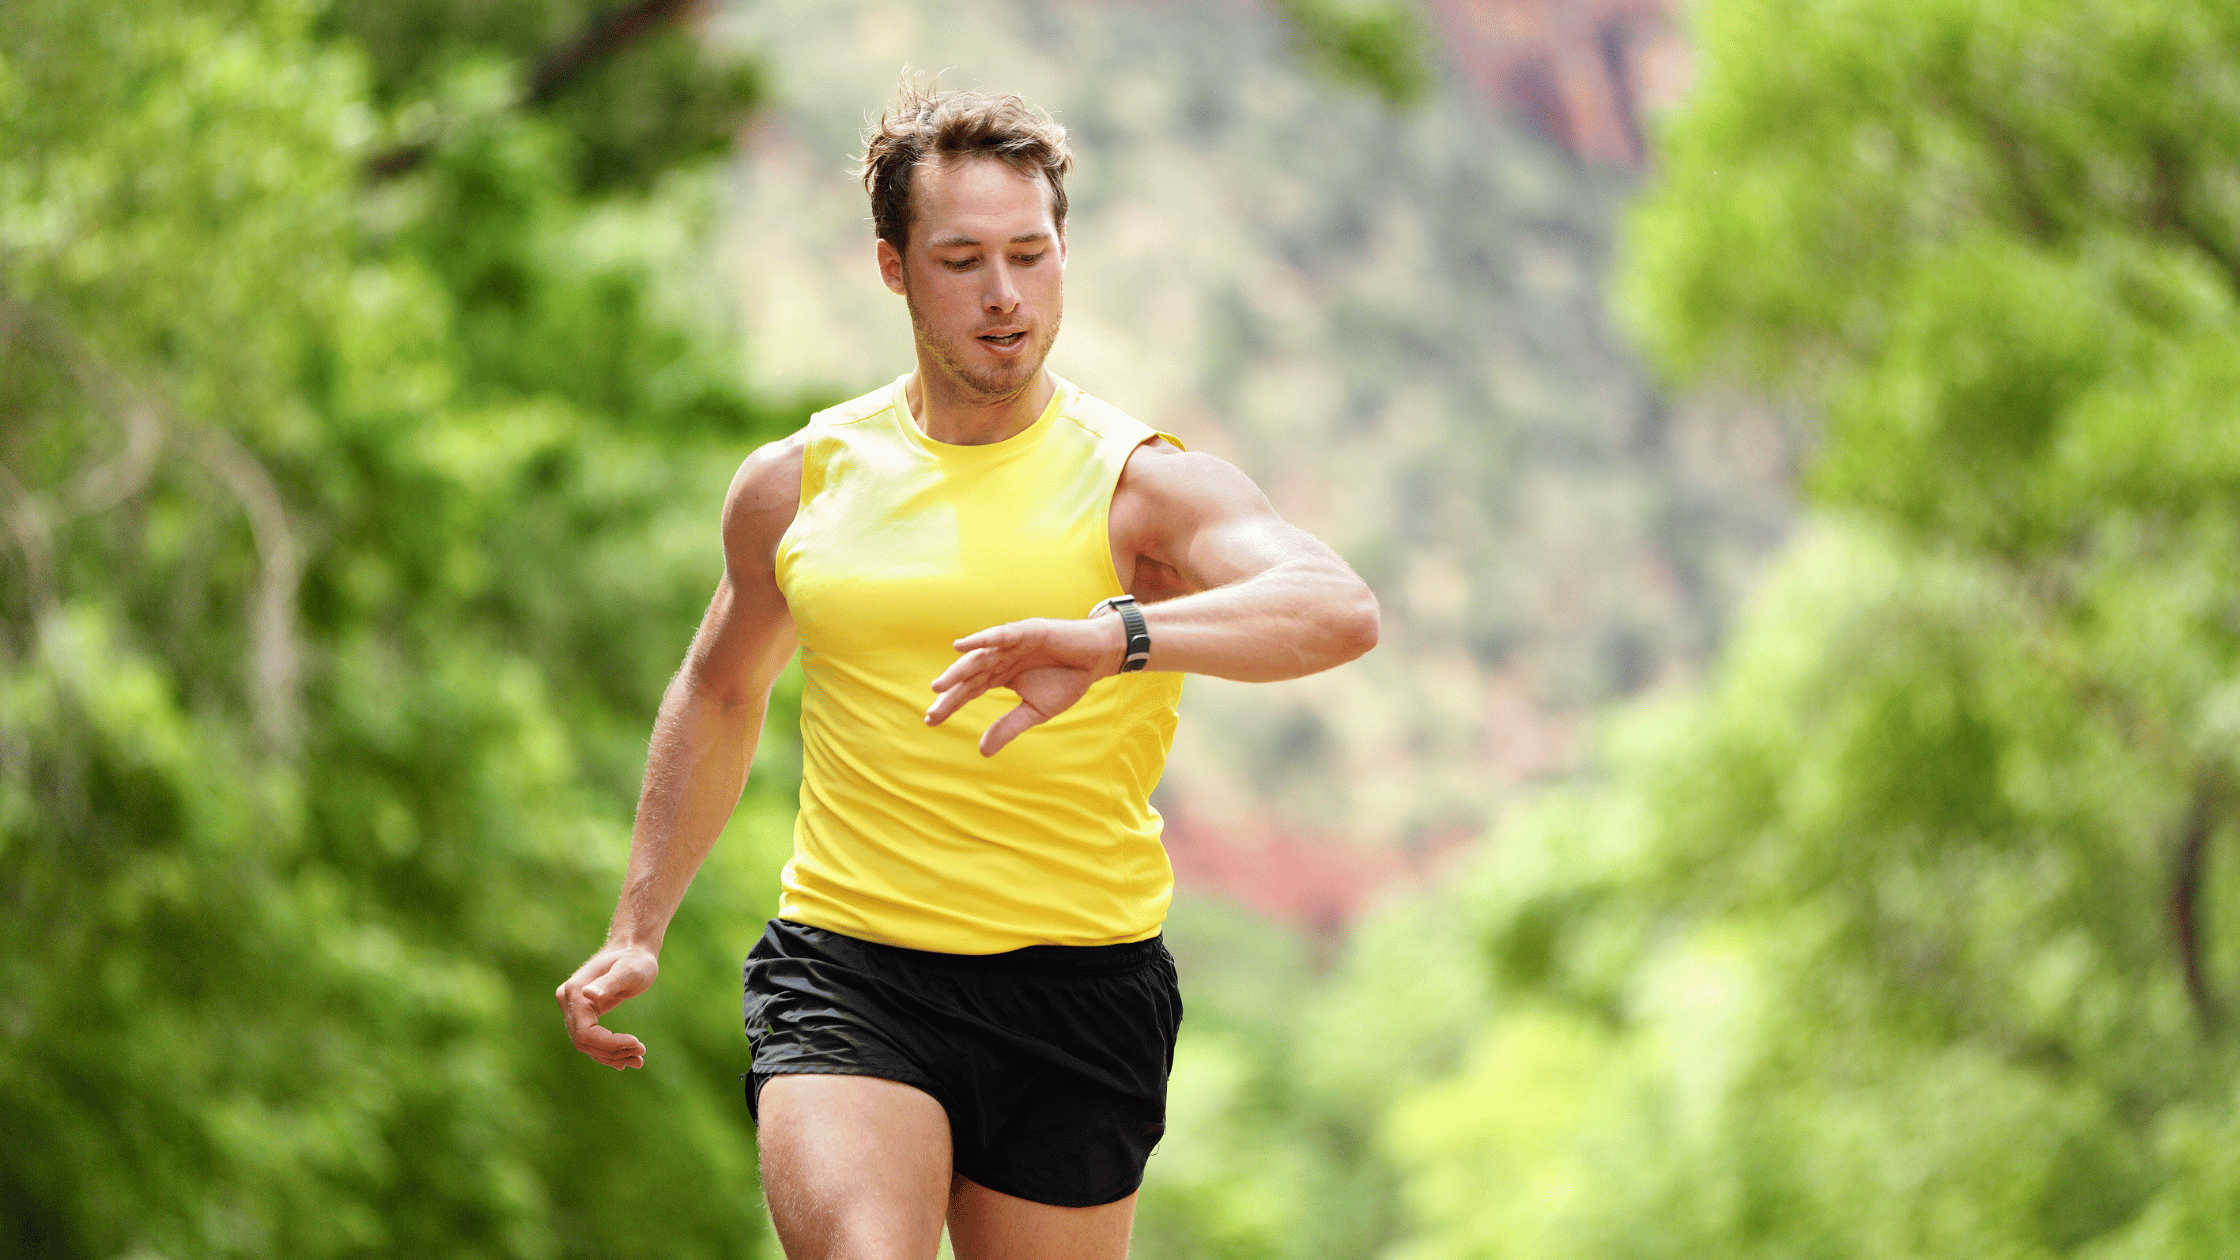 Marathon Training Heart Rate Zone Smart Watch